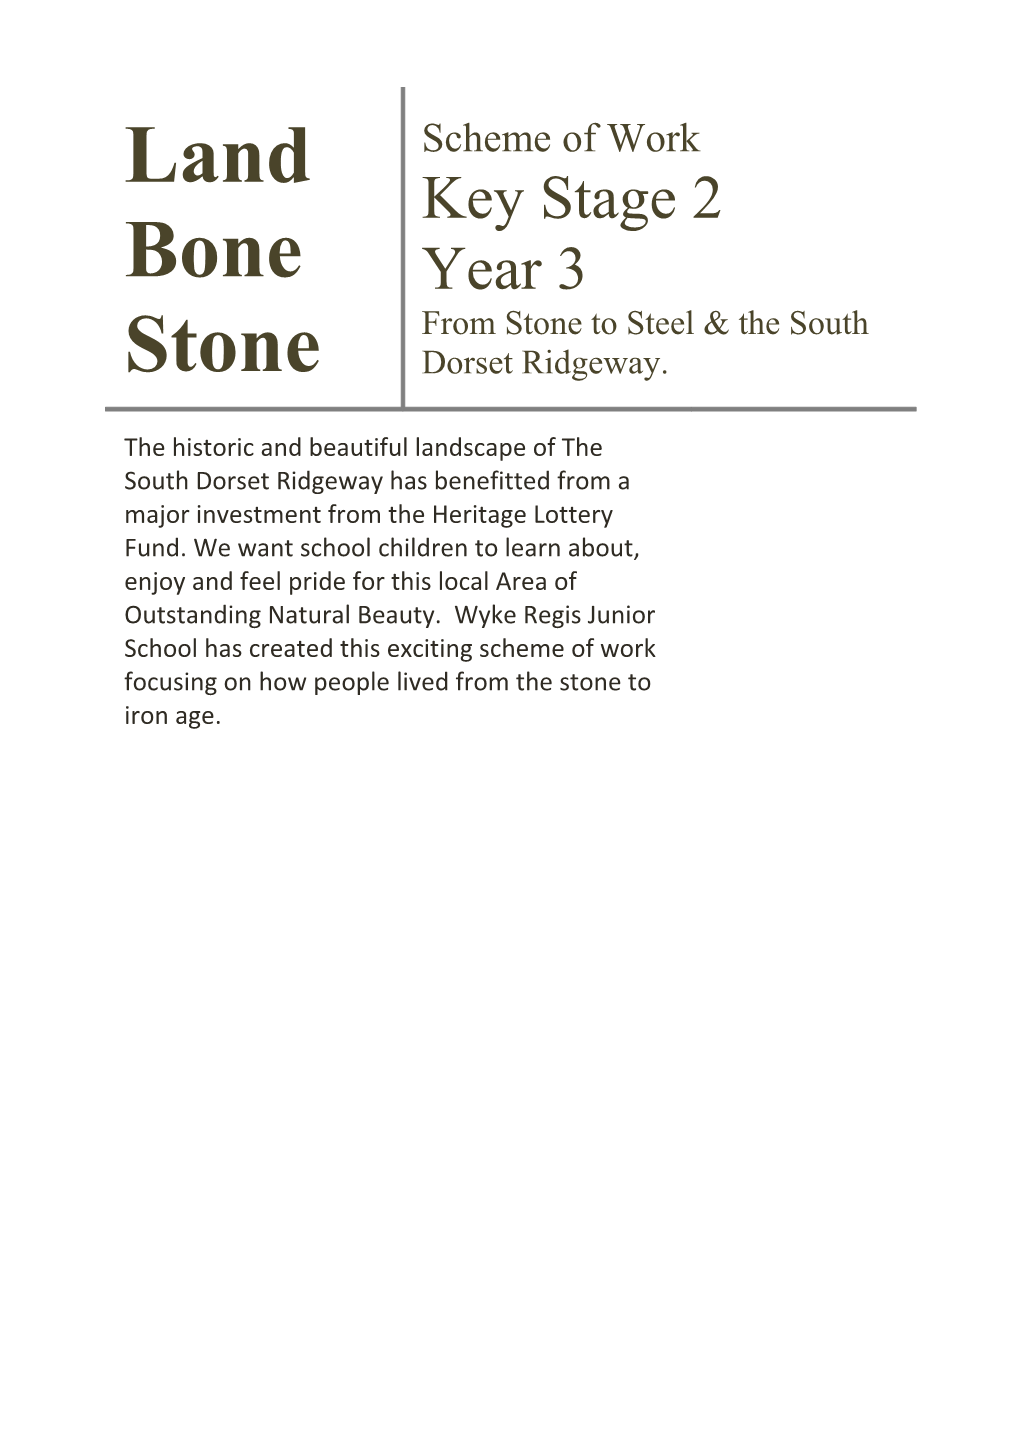 Land Bone Stone